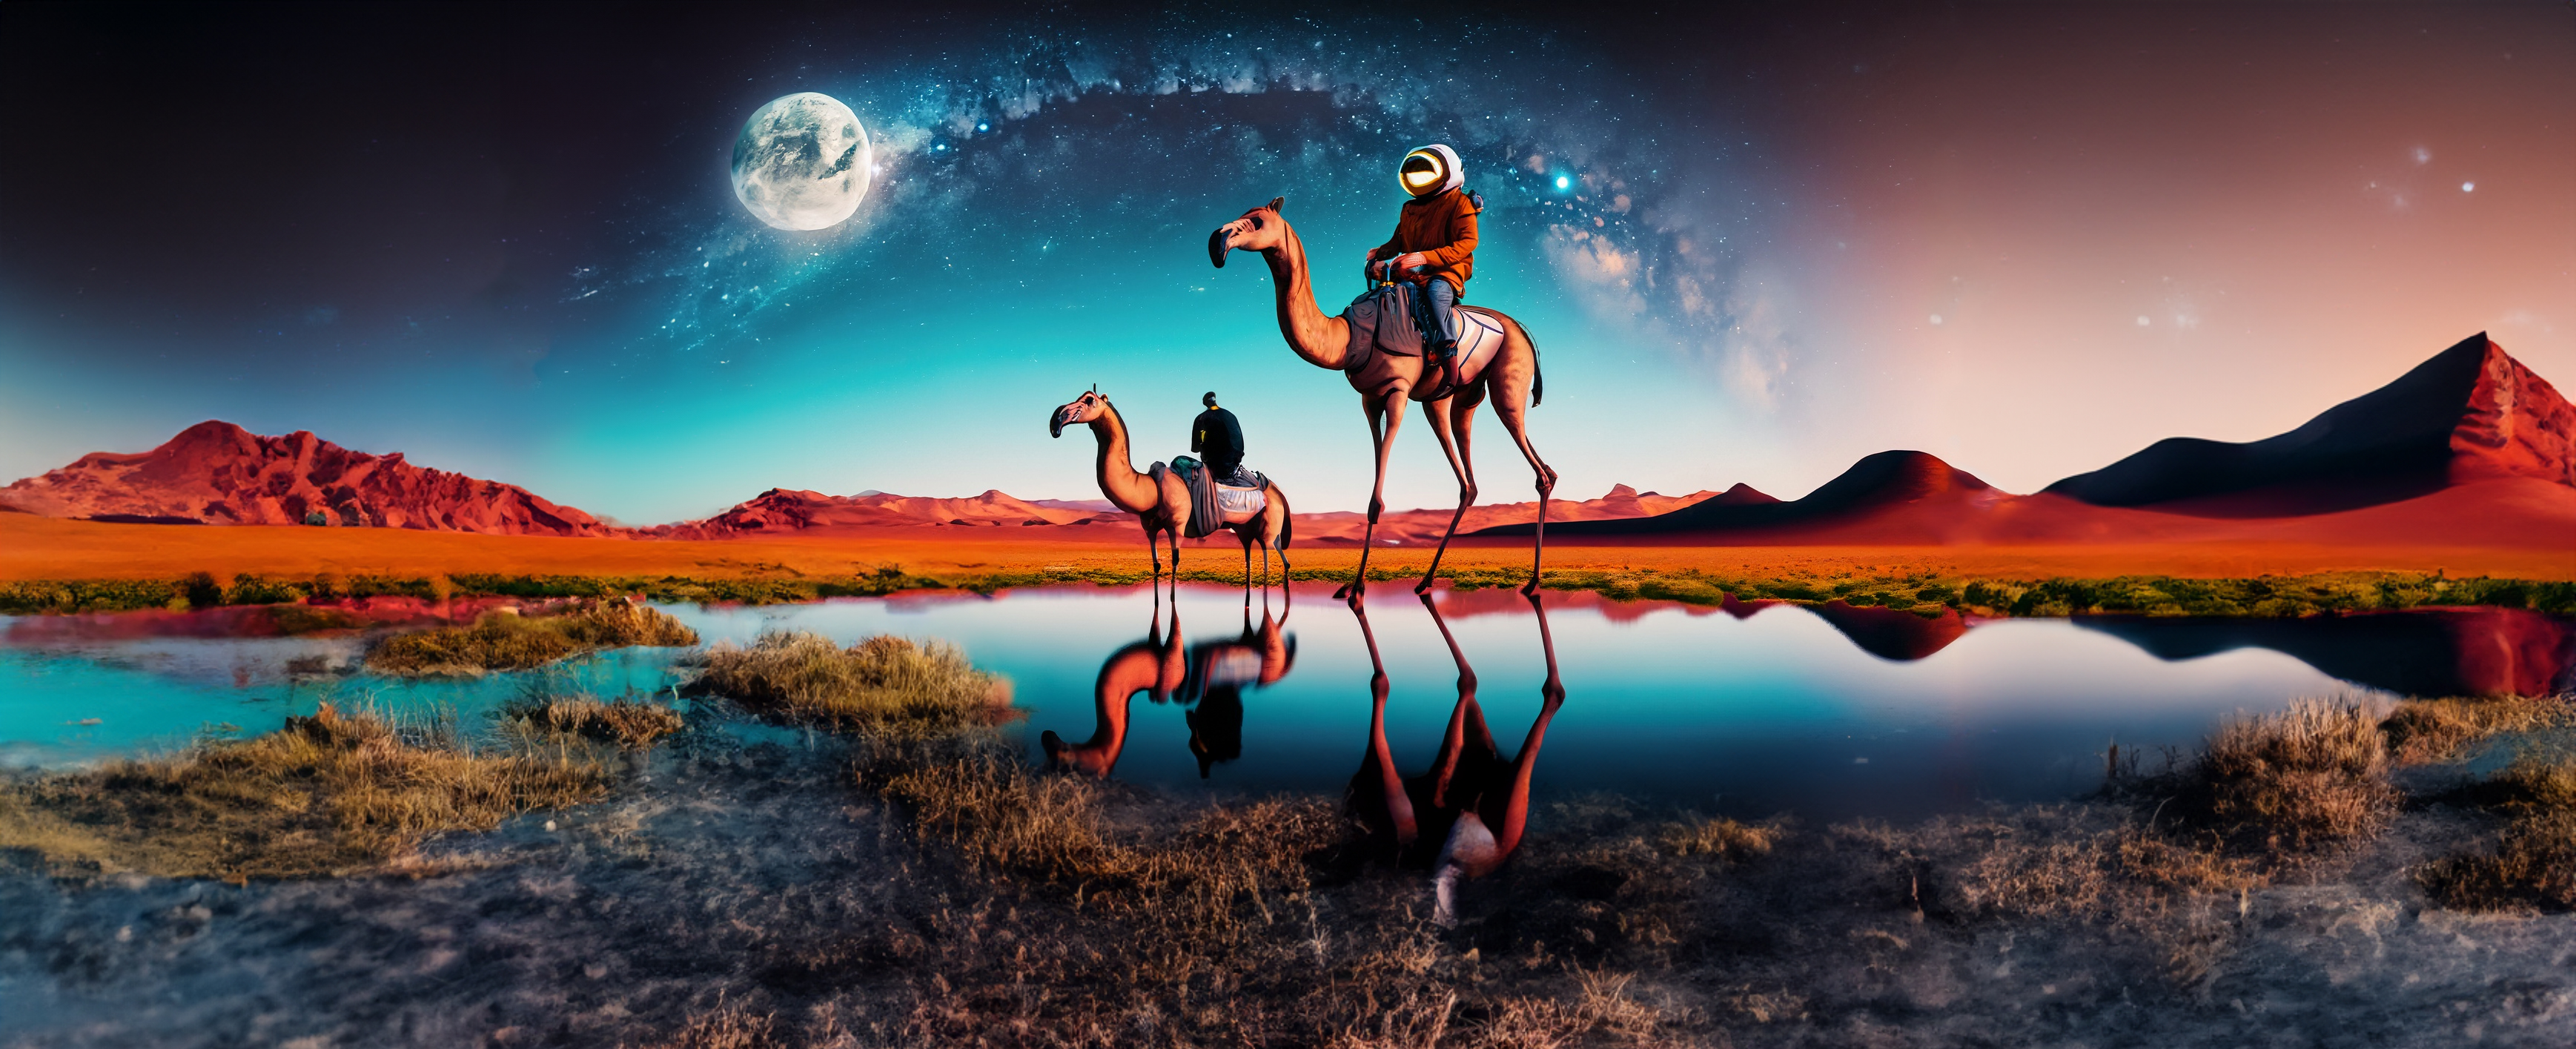 General 3475x1415 digital art space desert lake AI art reflection water sky stars animals Moon